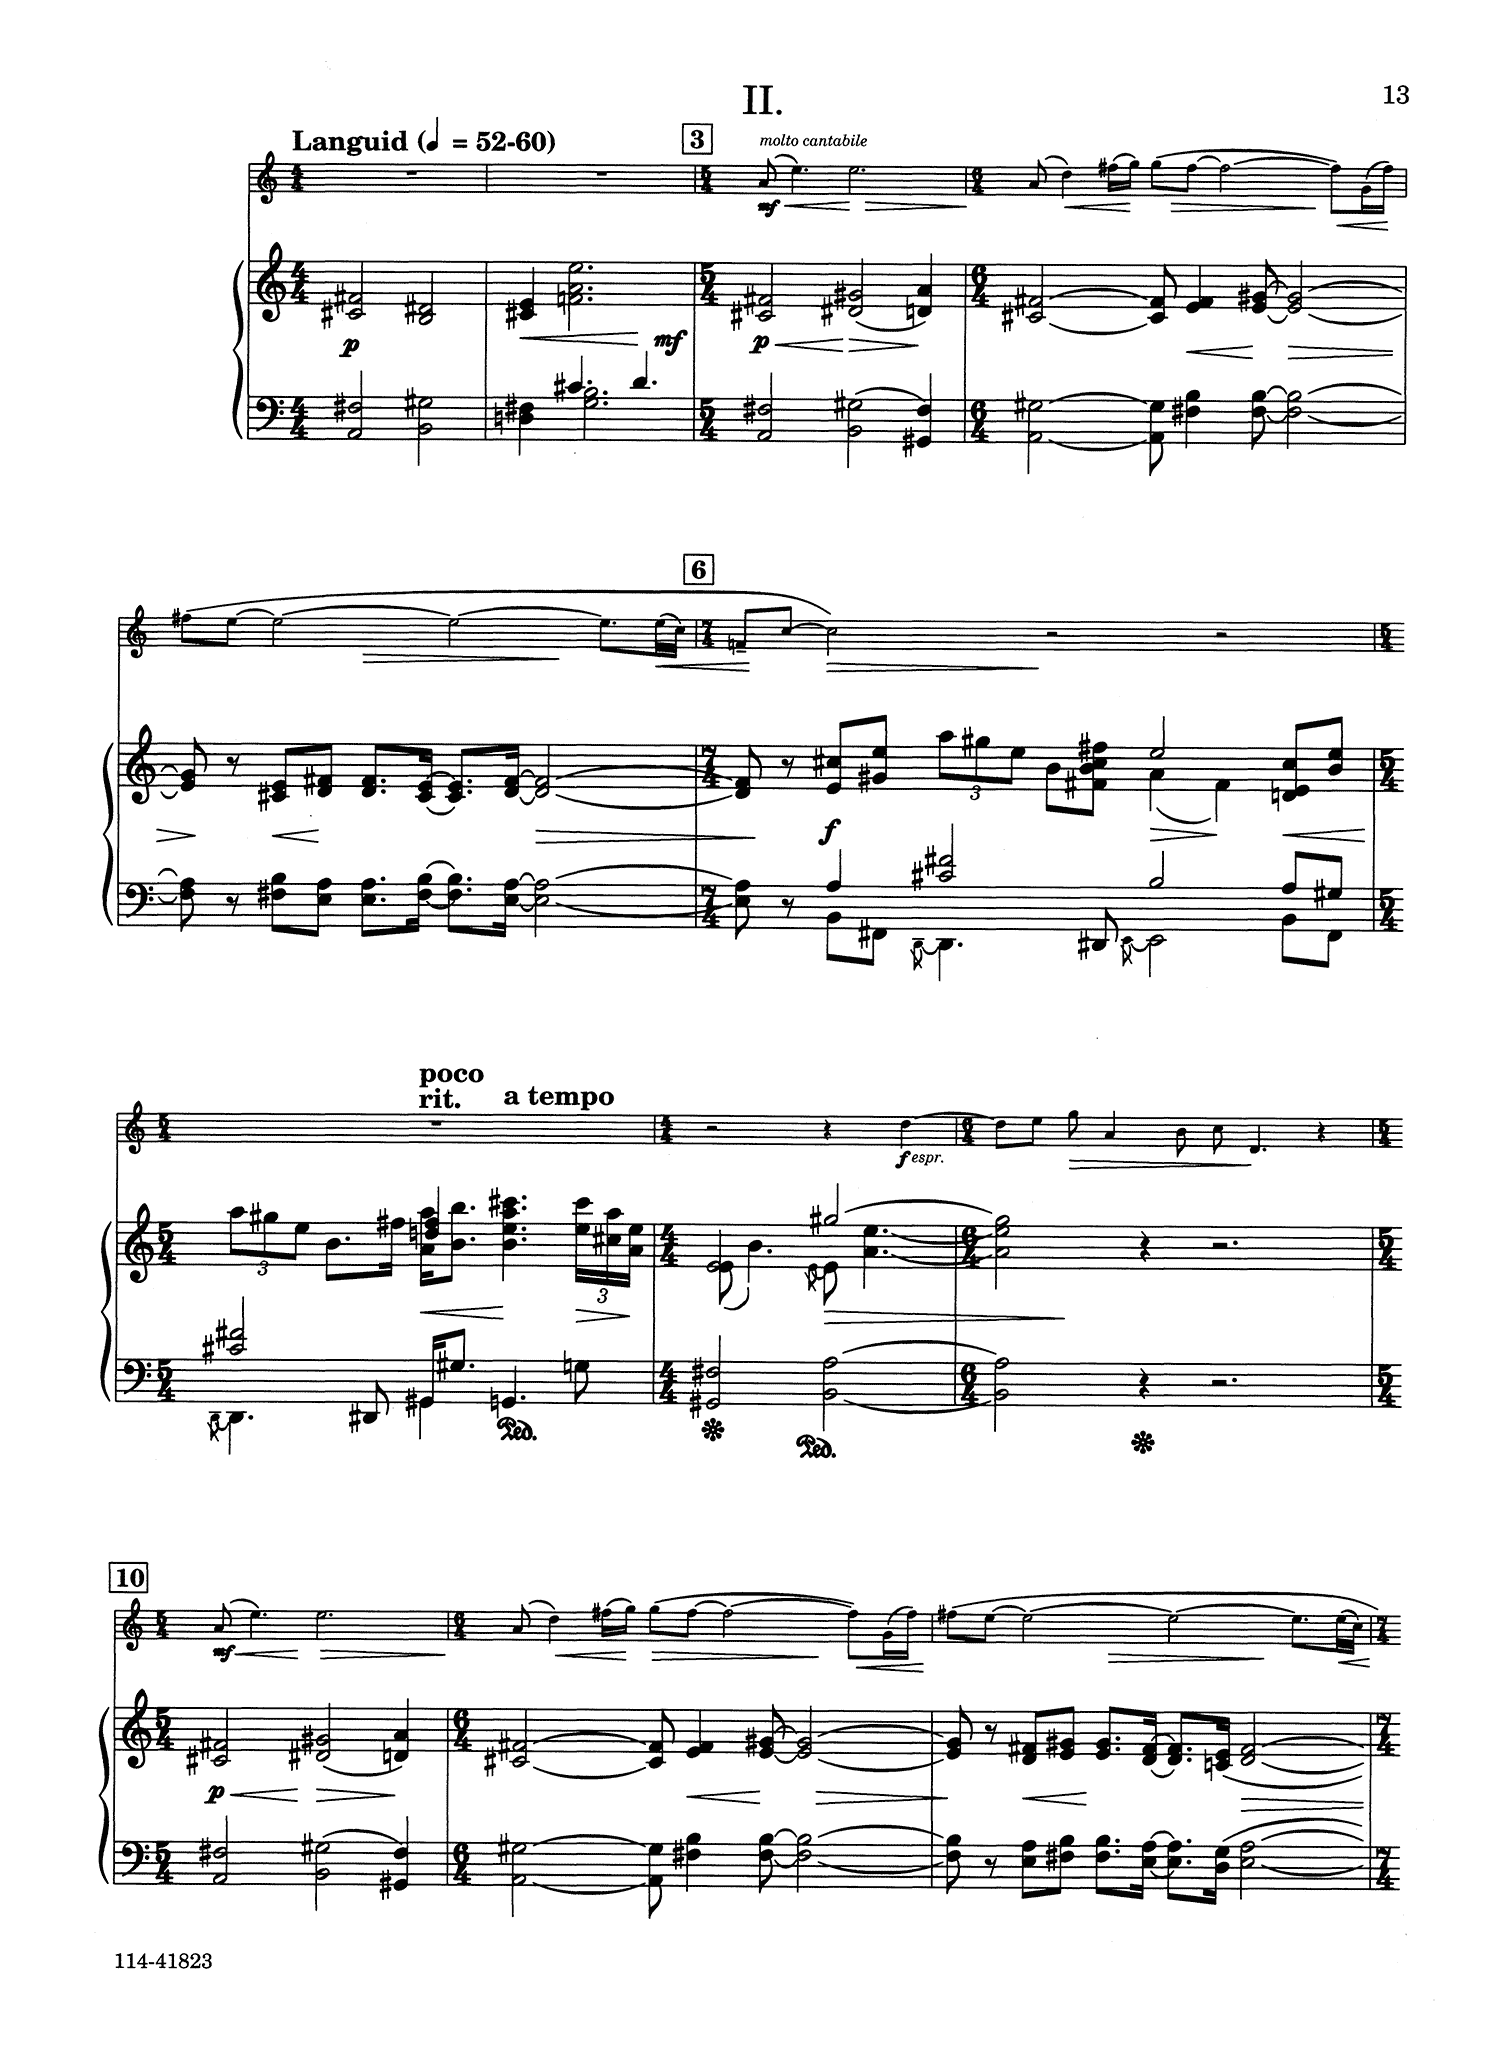 Dorff Summer Solstice clarinet concerto piano reduction - Movement 2